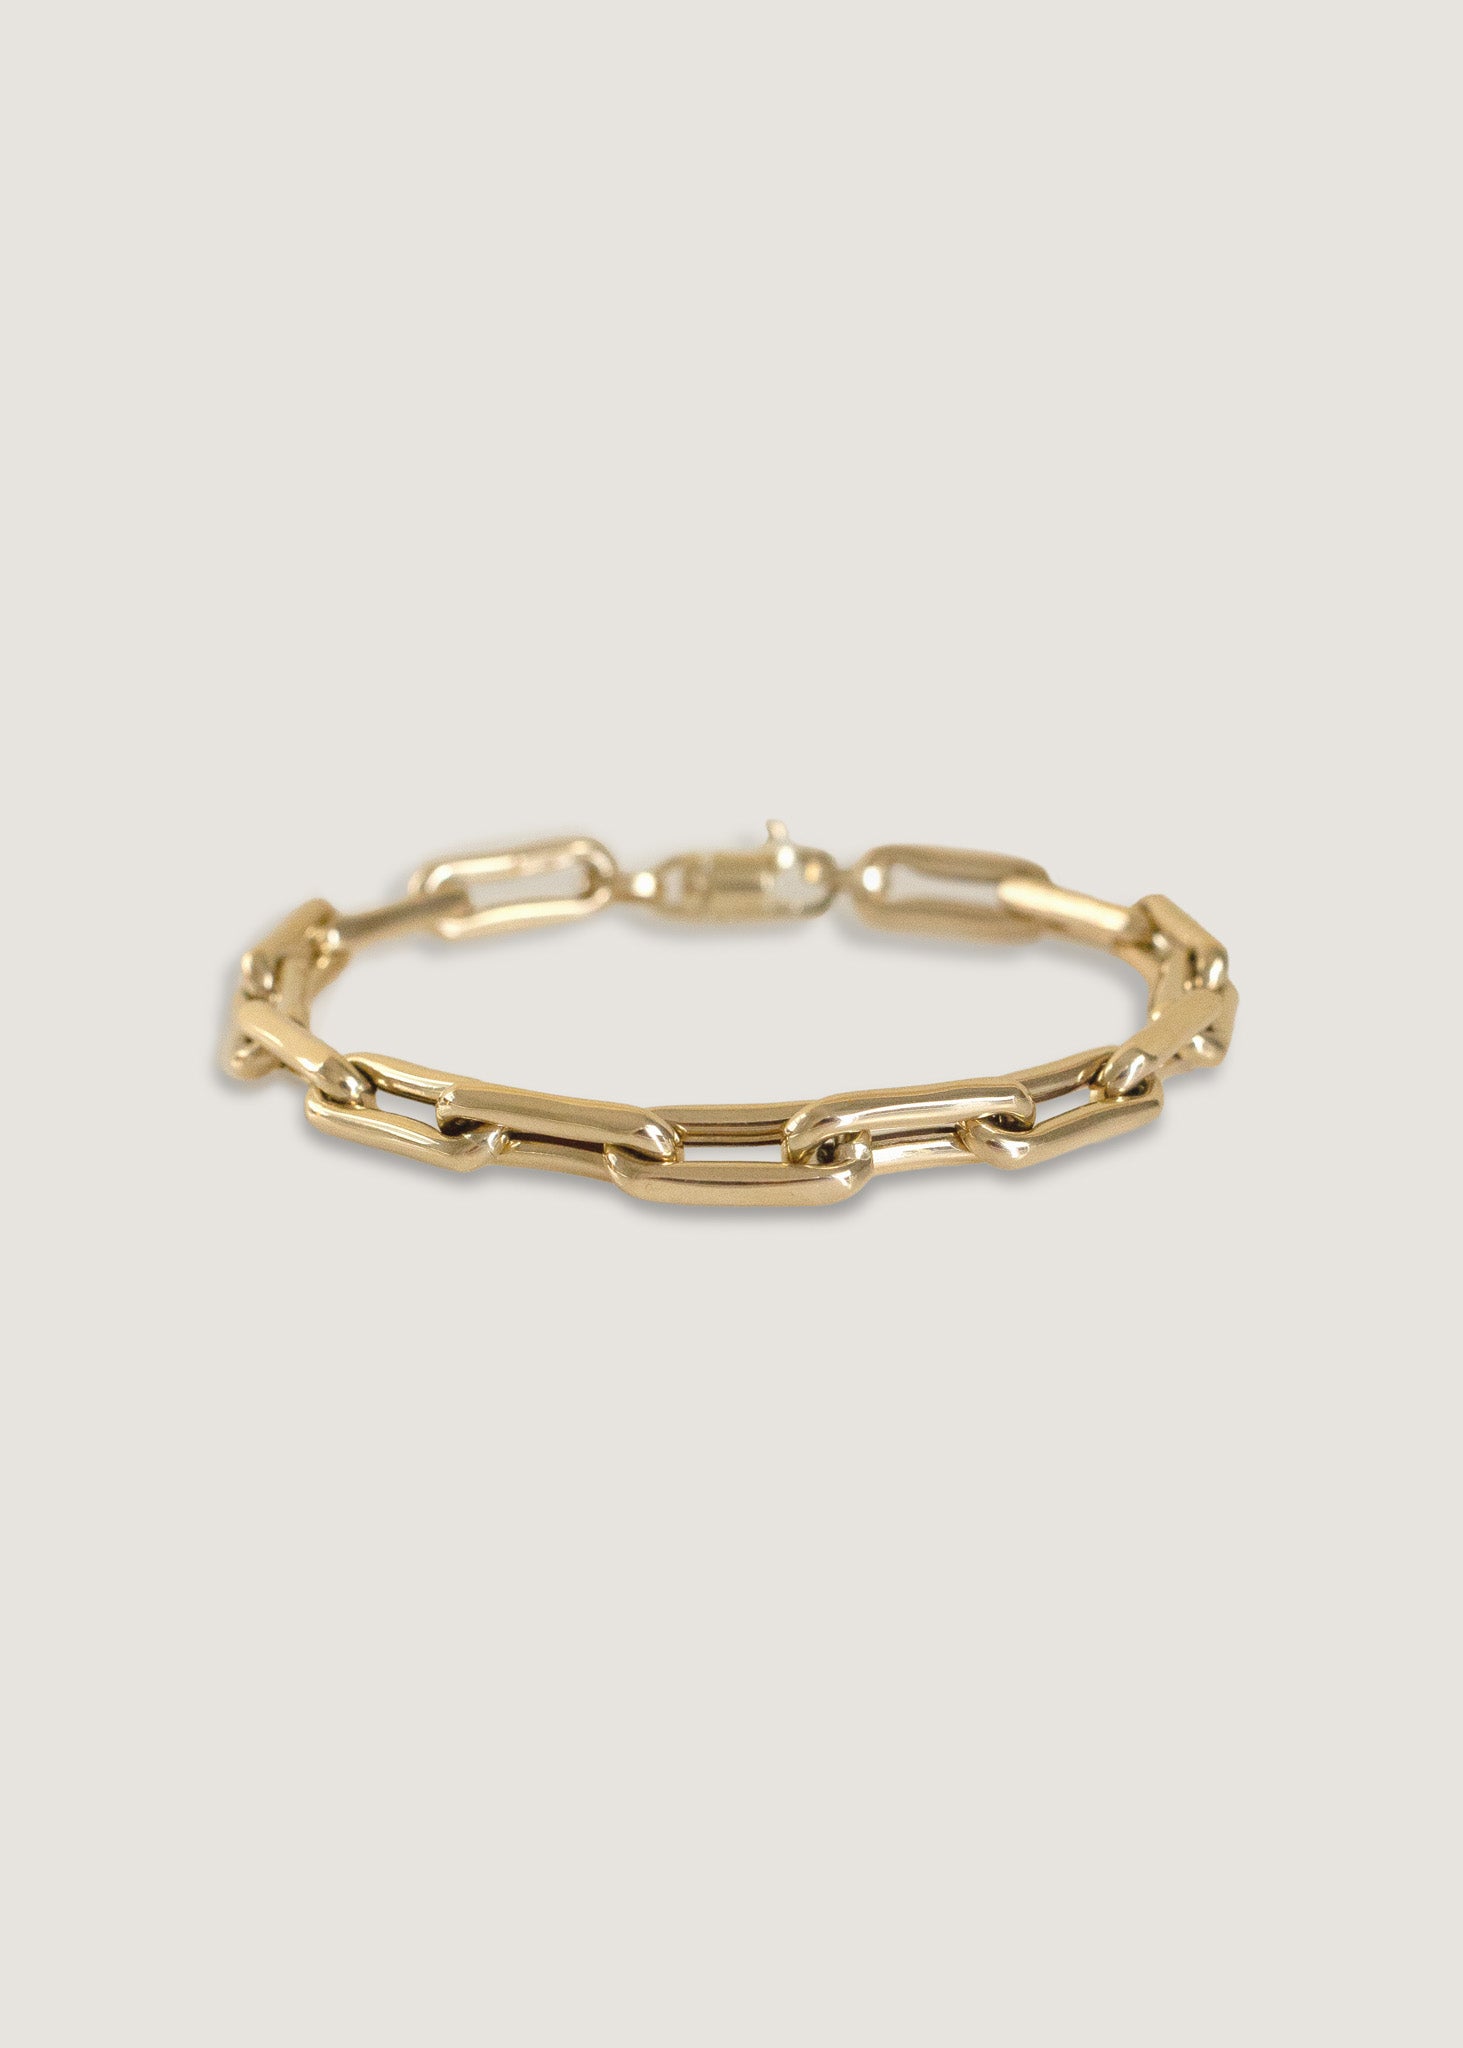 alt="Rome Bold Link Chain Bracelet"